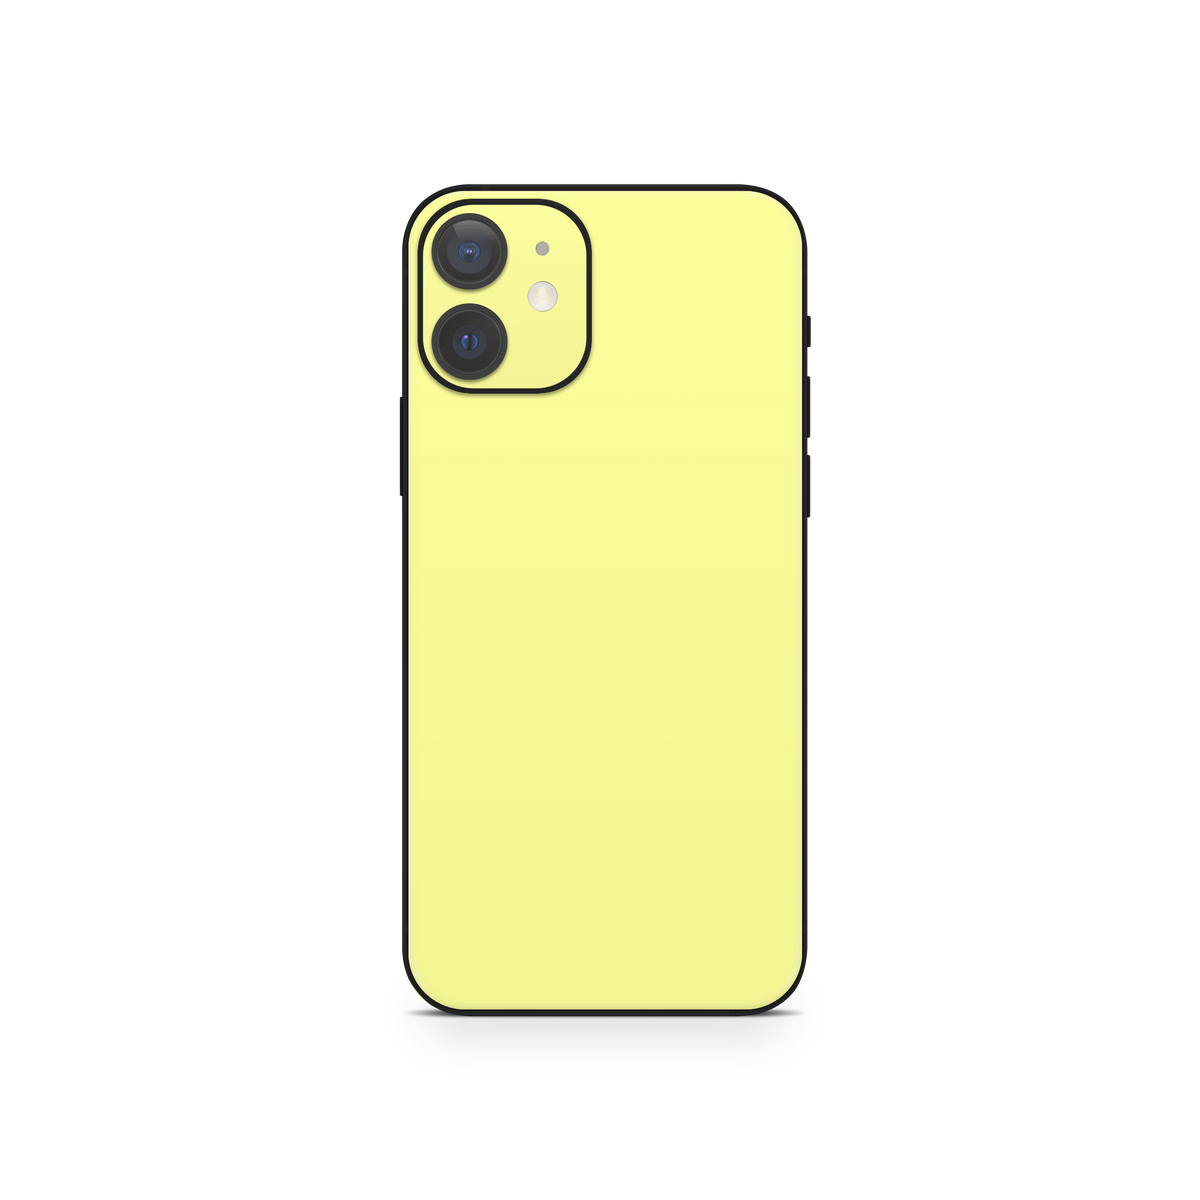 Apple iPhone 12 Pale Yellow iPhone 12 Skin